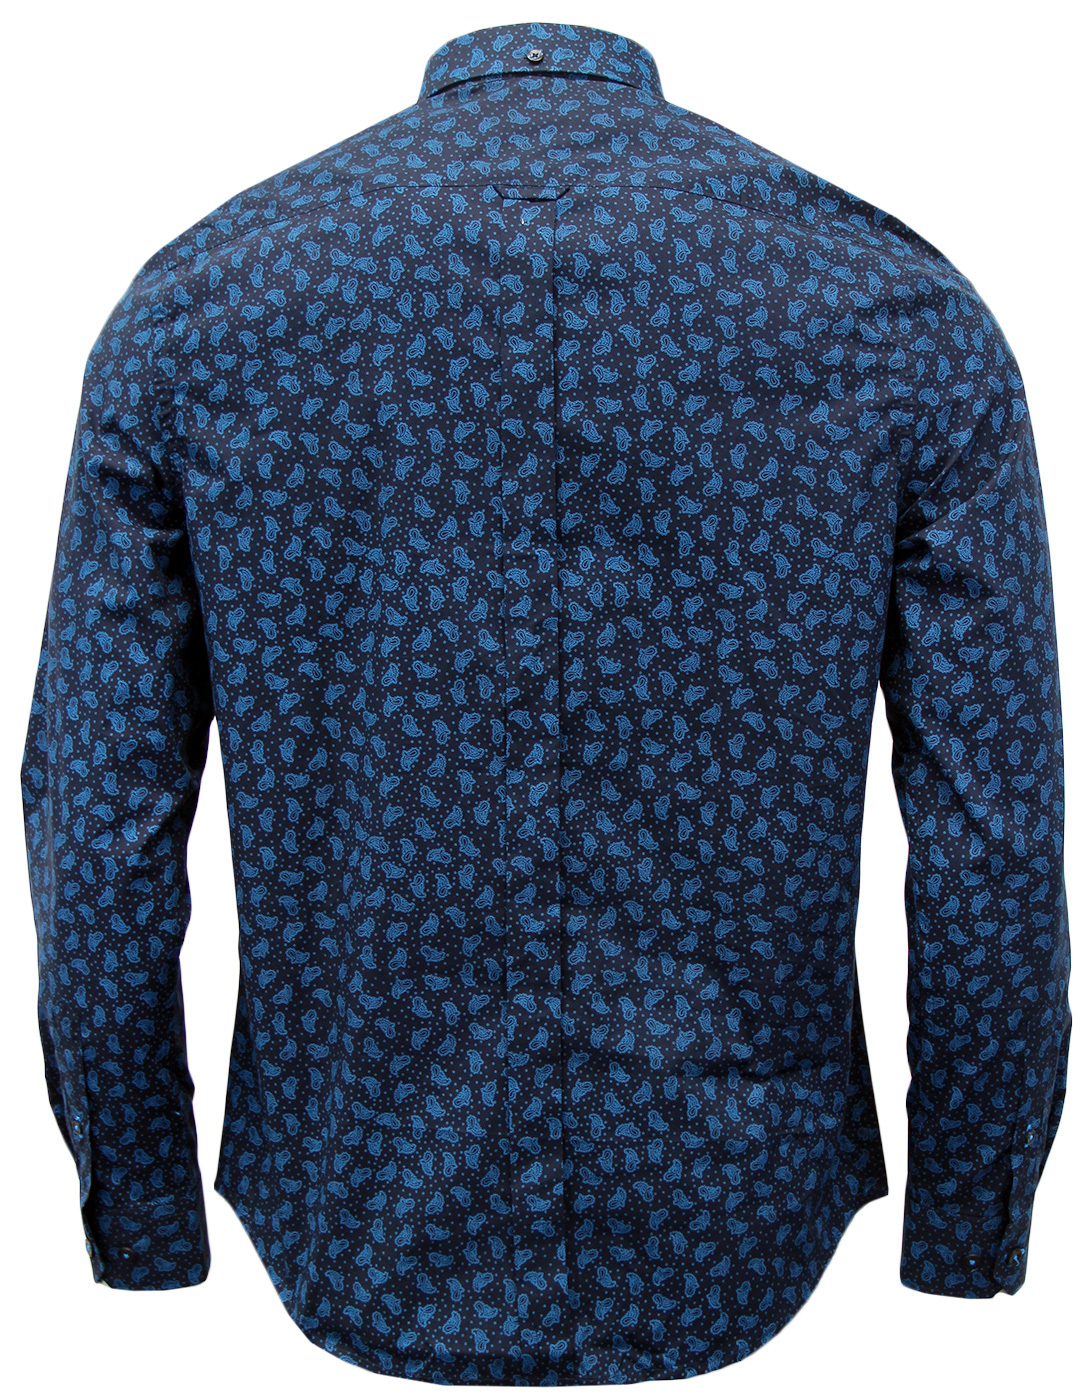 BEN SHERMAN Retro Mod Sixties Paisley Dot Shirt in Vivid Blue